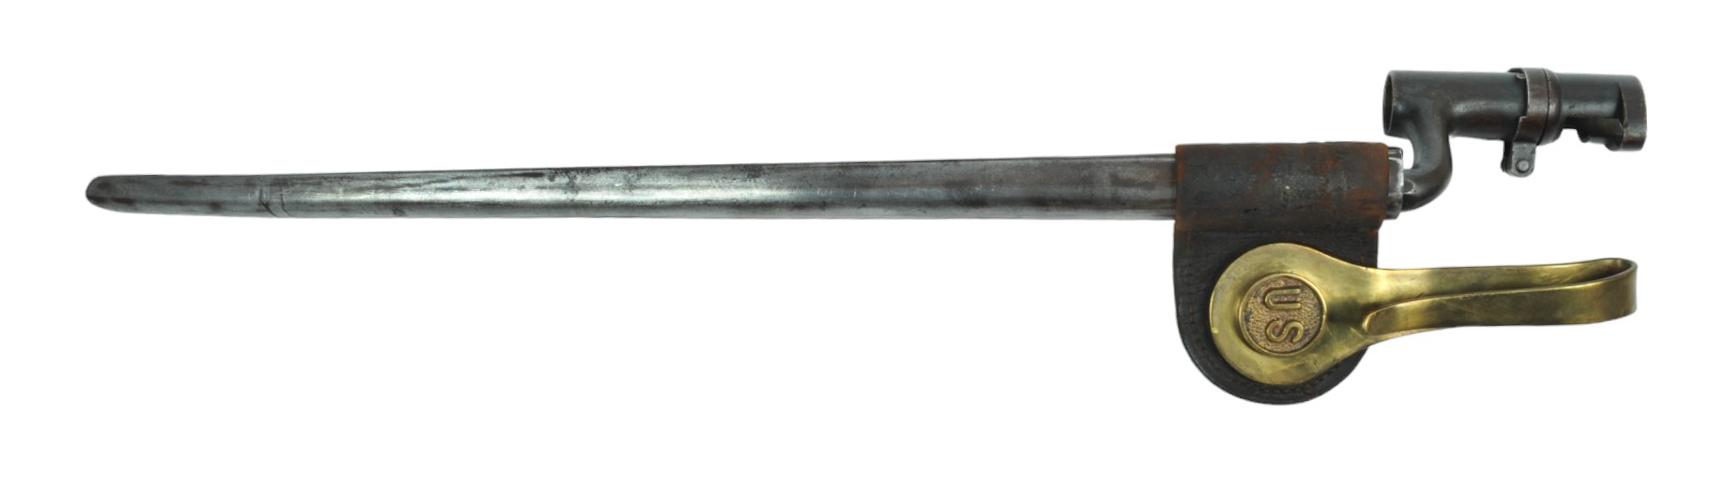 US Military Indian Wars era M1873 45/70 Trapdoor Socket Bayonet  (VDM)